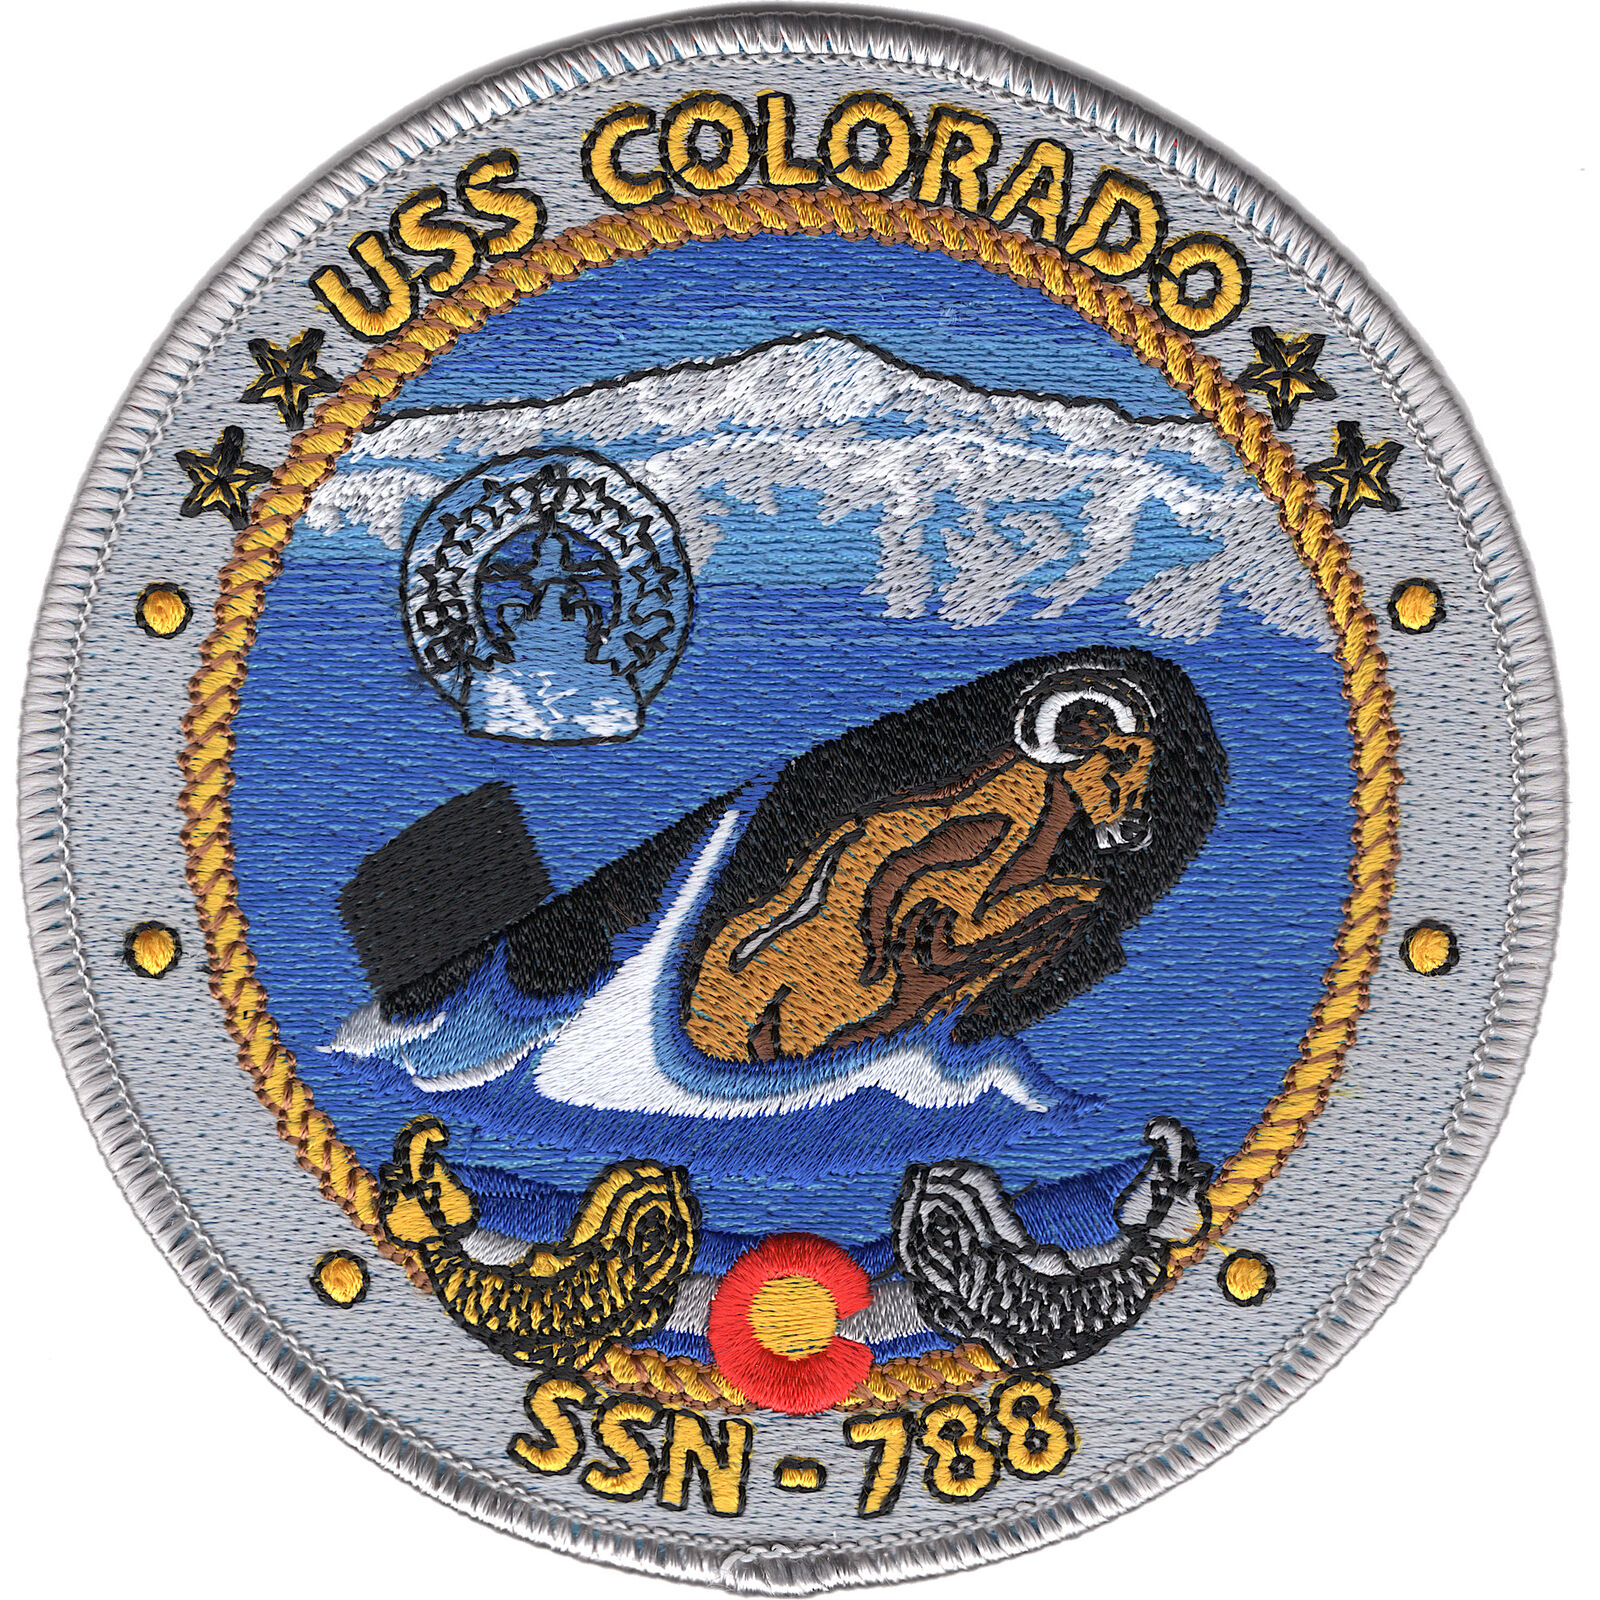 SSN-788 USS Colorado Patch